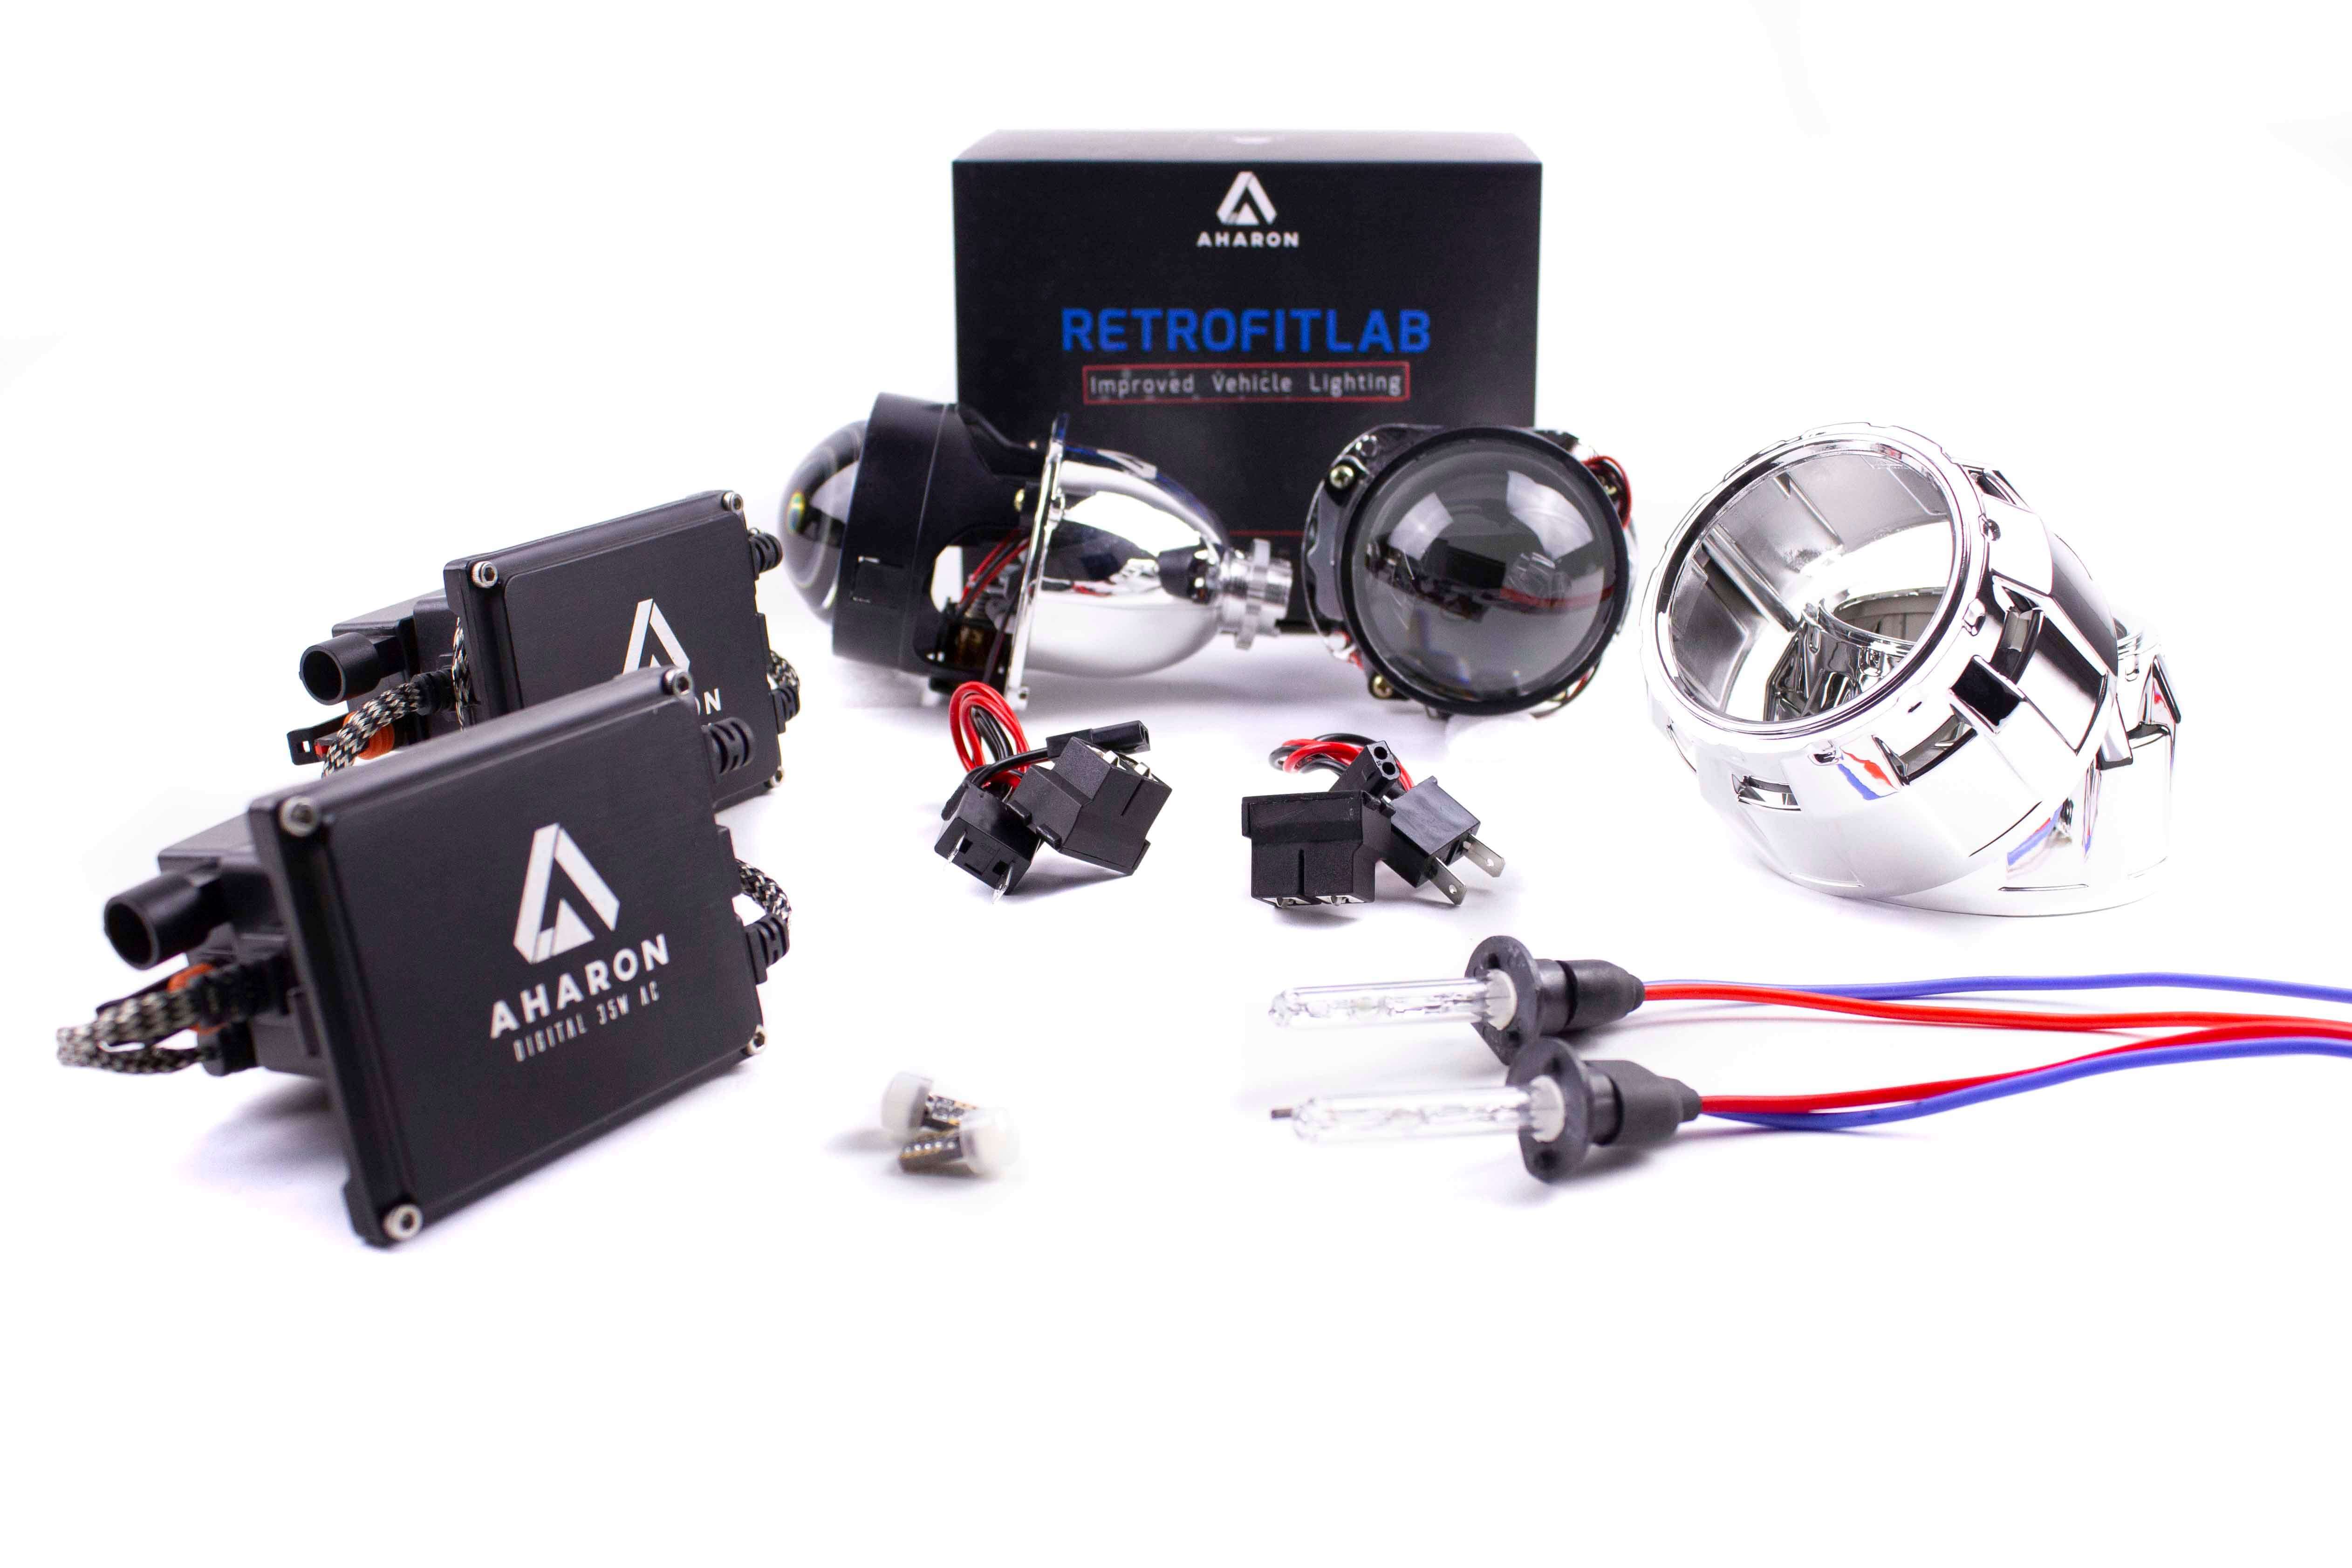 Mini H1 Bi-xenon HID projector headlight upgrade kit to convert halogen to  bi-xenon HID